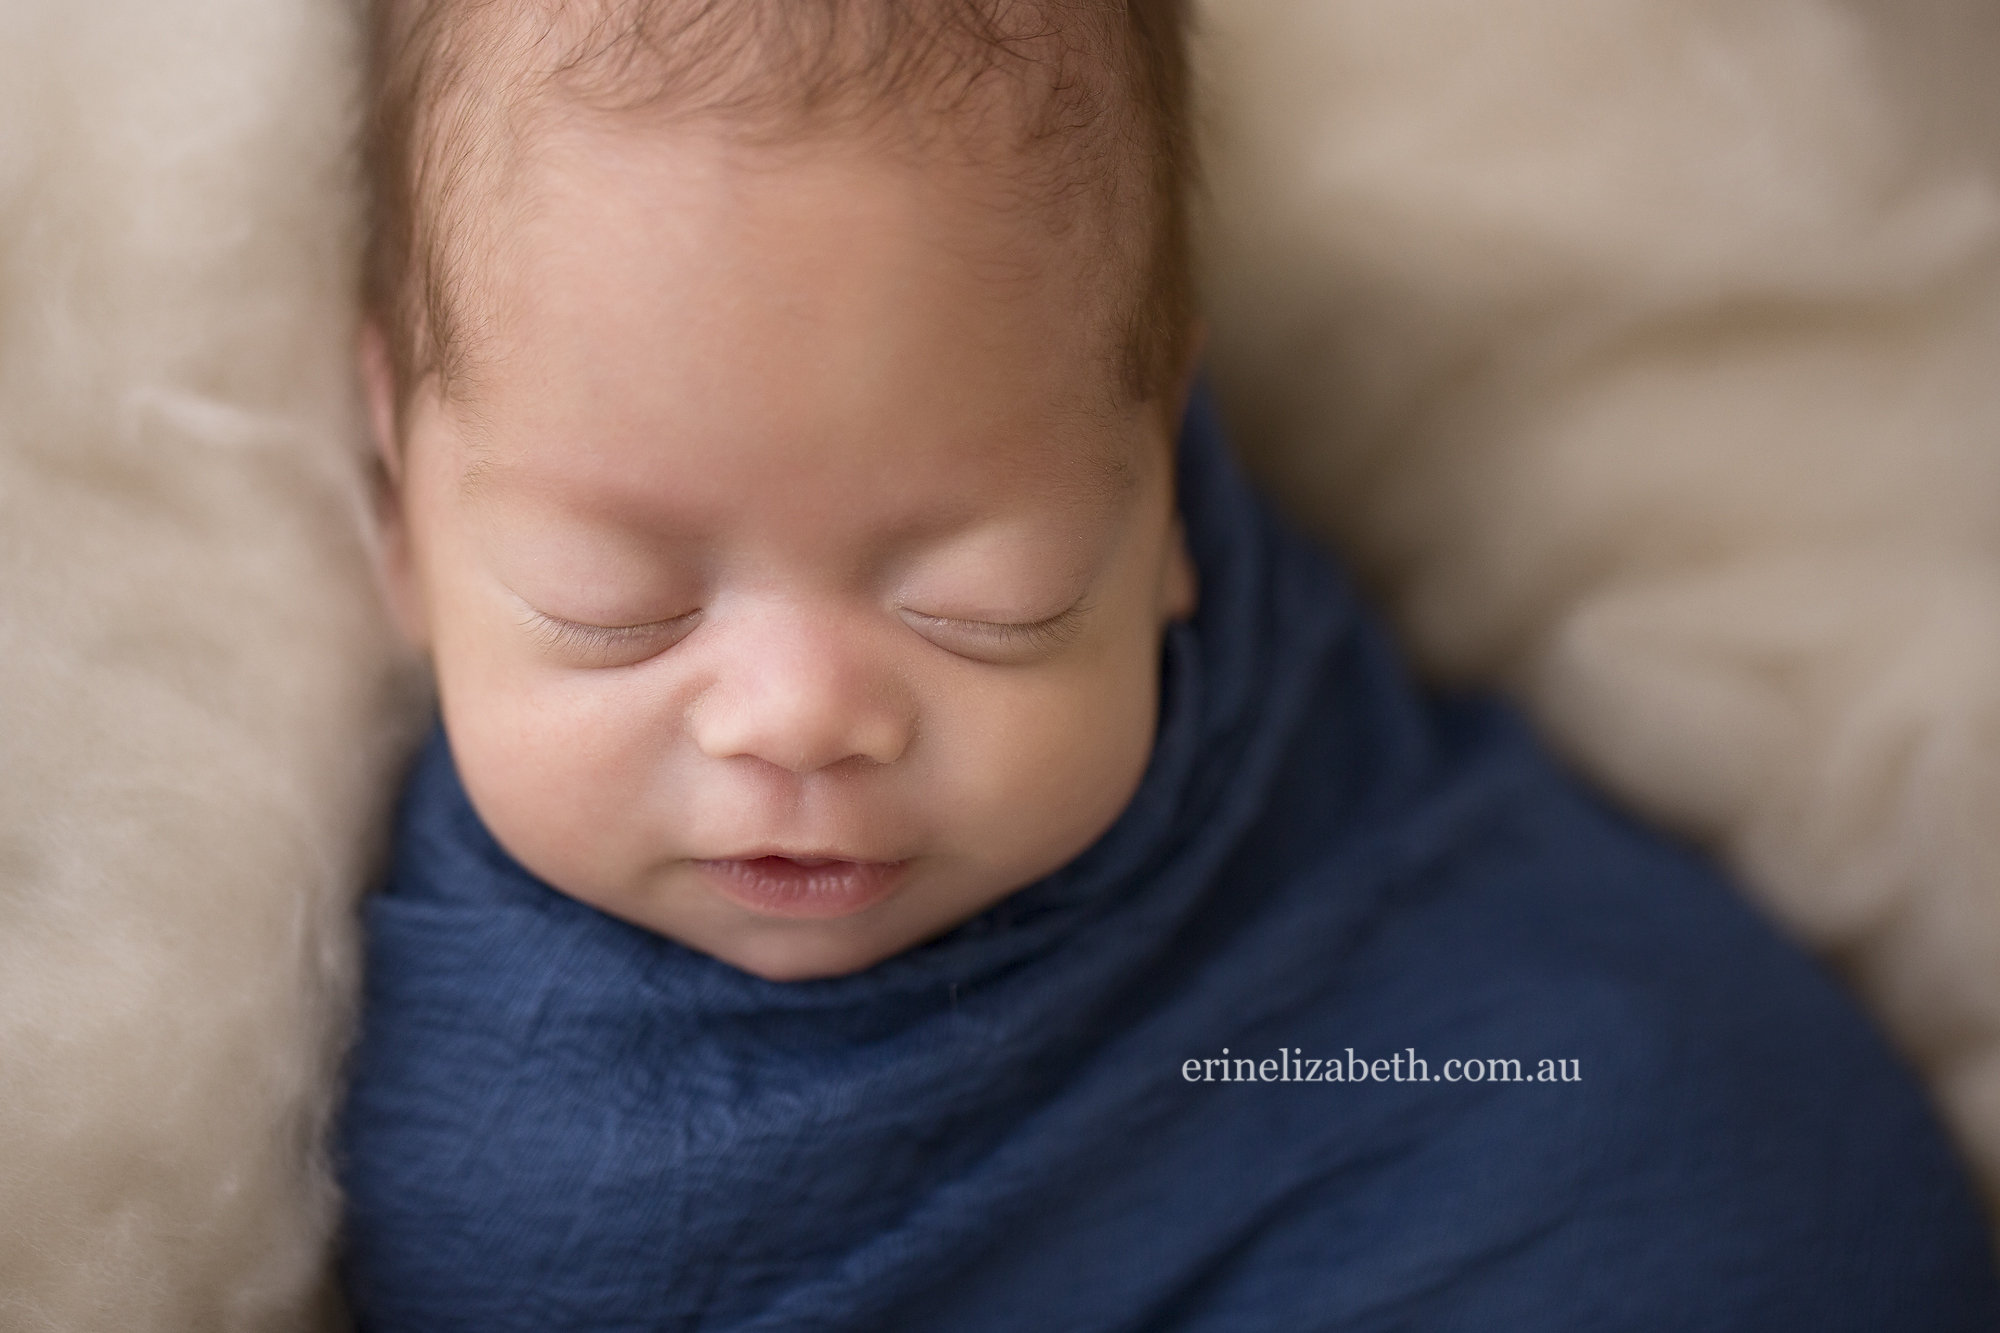 PHOTO:Kim Tucci gave birth to quintuplets at King Edward Memorial Hospital in Perth, Australia.  